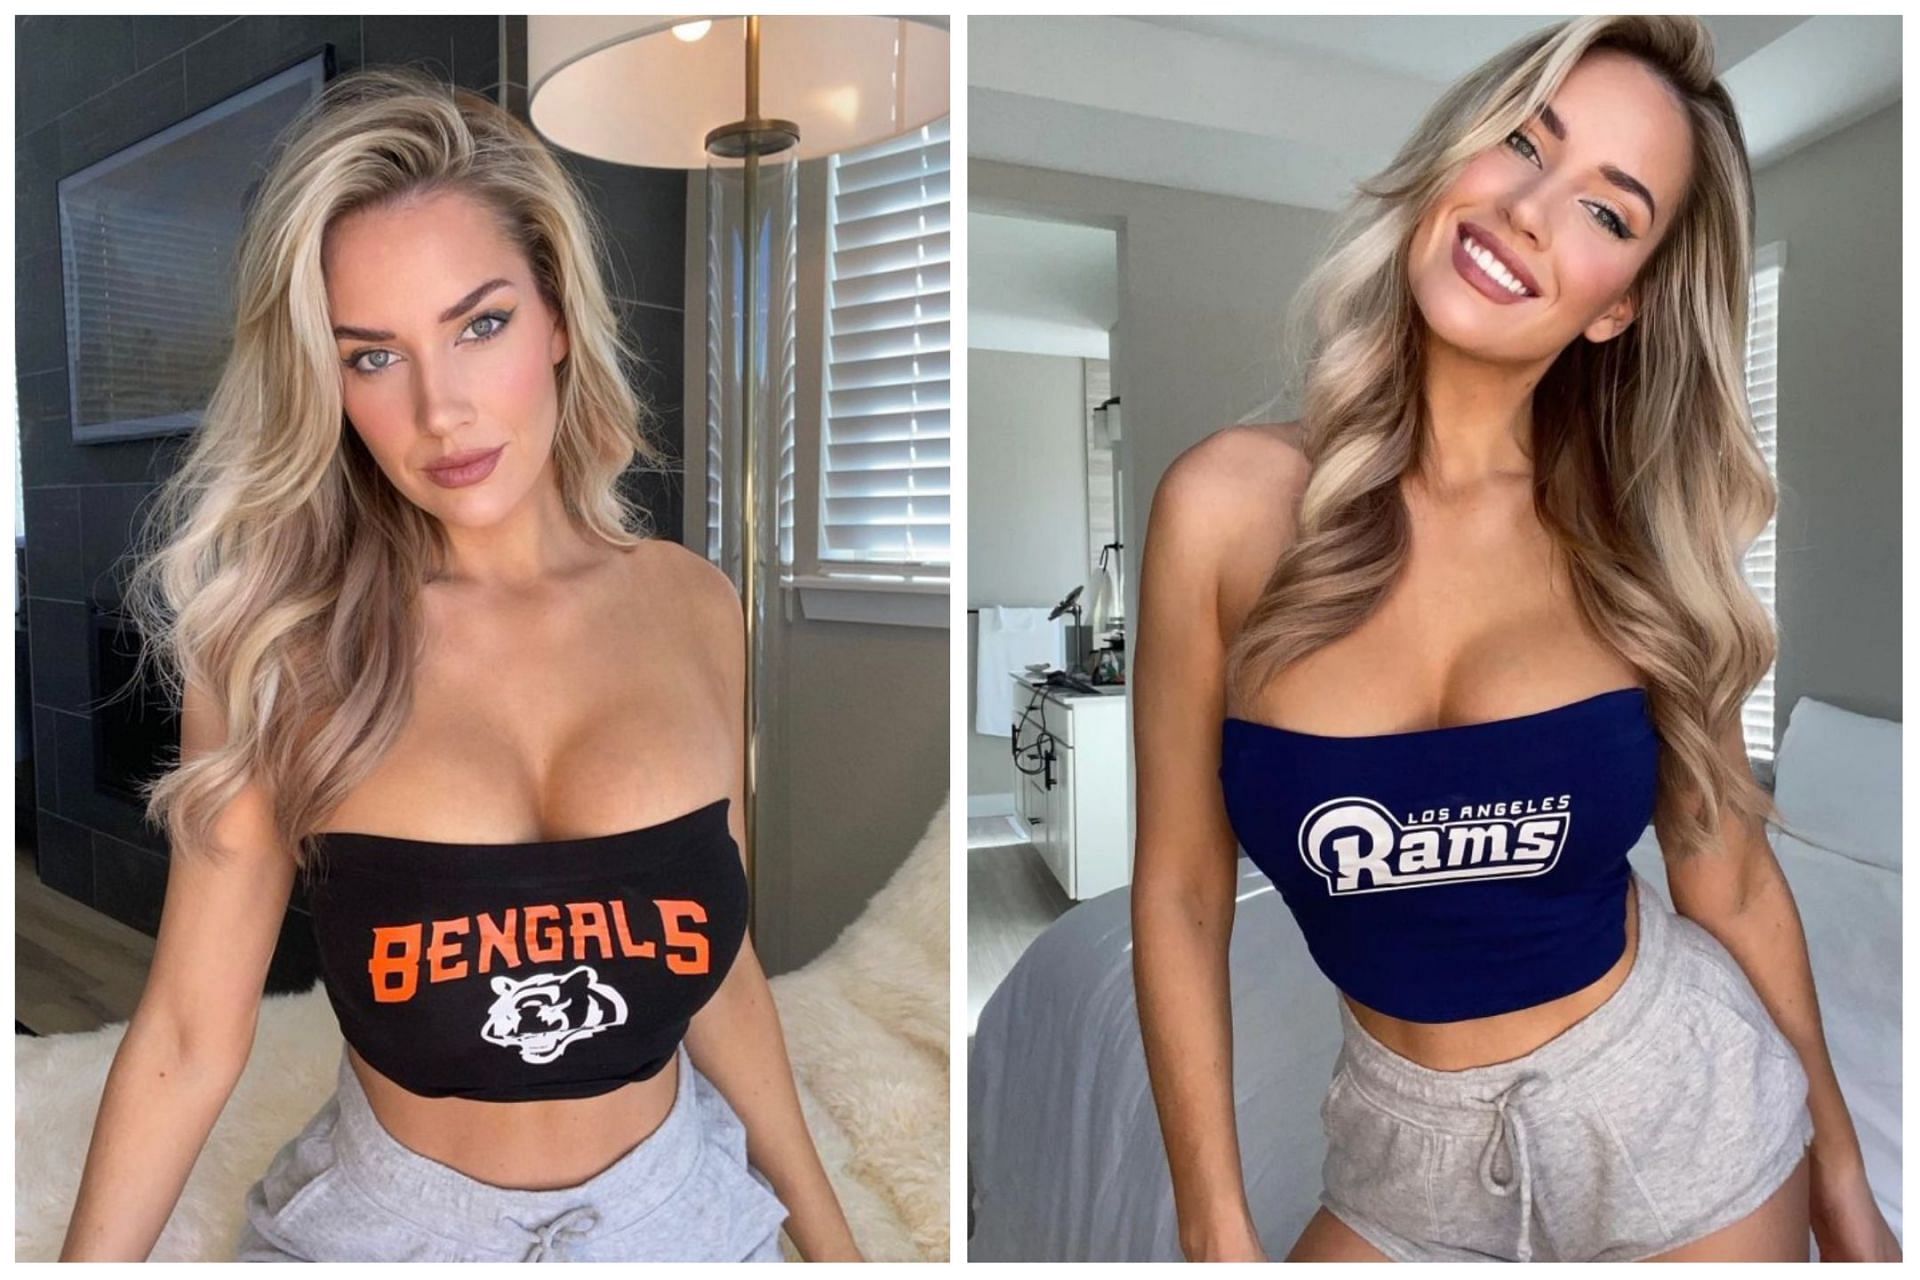 Spiranac is often seen sporting NFL teams merchandise on Instagram